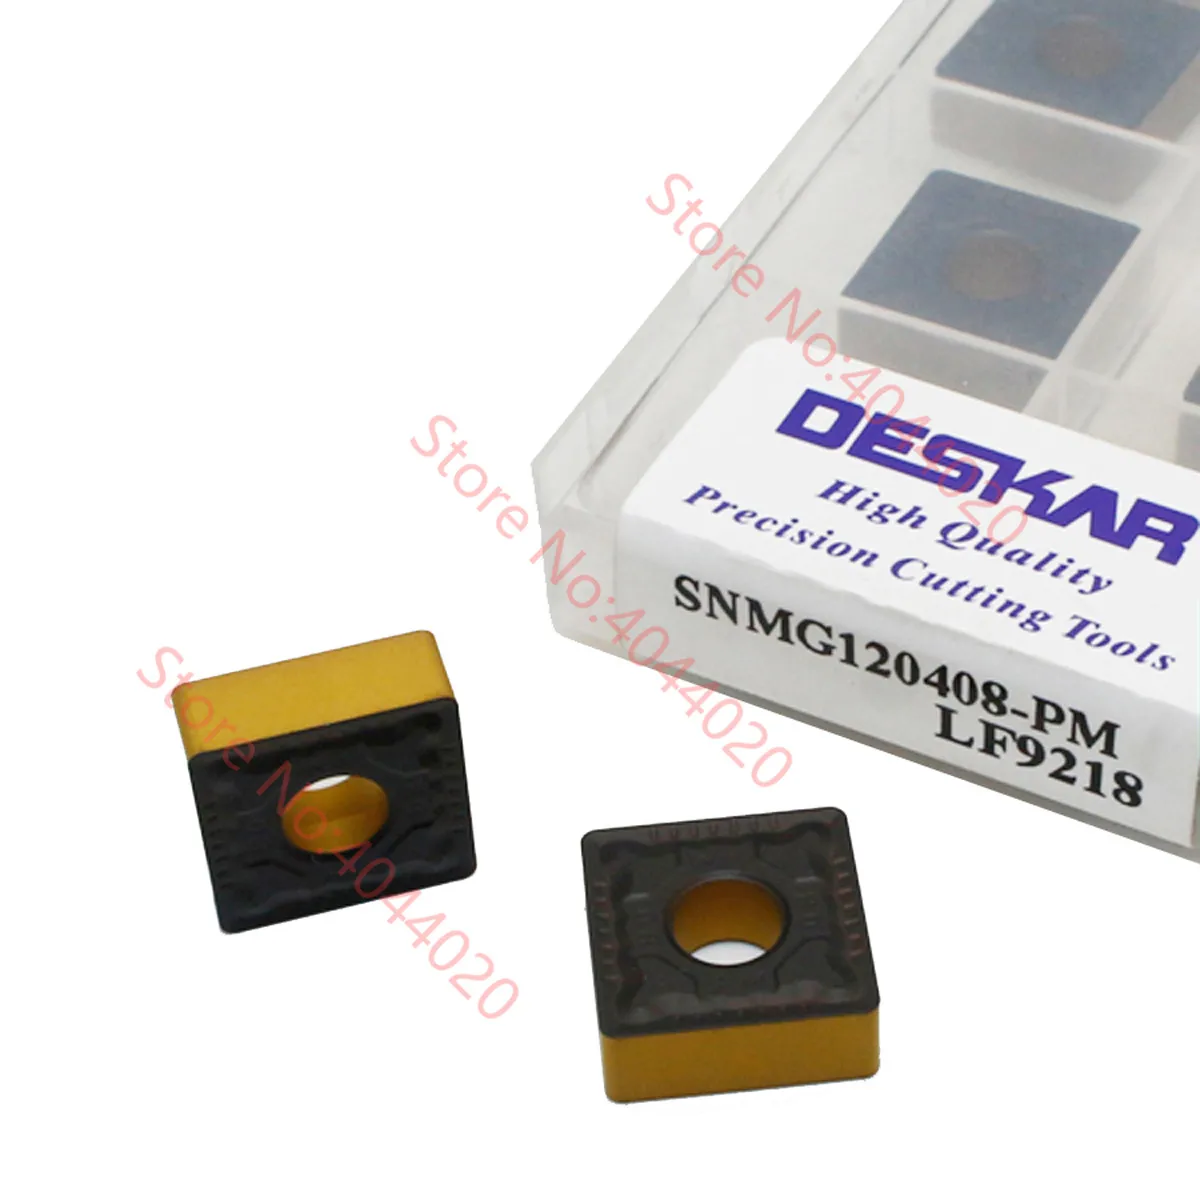 

DESKAR SNMG120404-TM/SNMG120408-TM/SNMG120404-PM/SNMG120408-PM/SNMG120408L-S/SNMG120408R-S LF9218 CARBIDE INSERT 10PCS/BOX